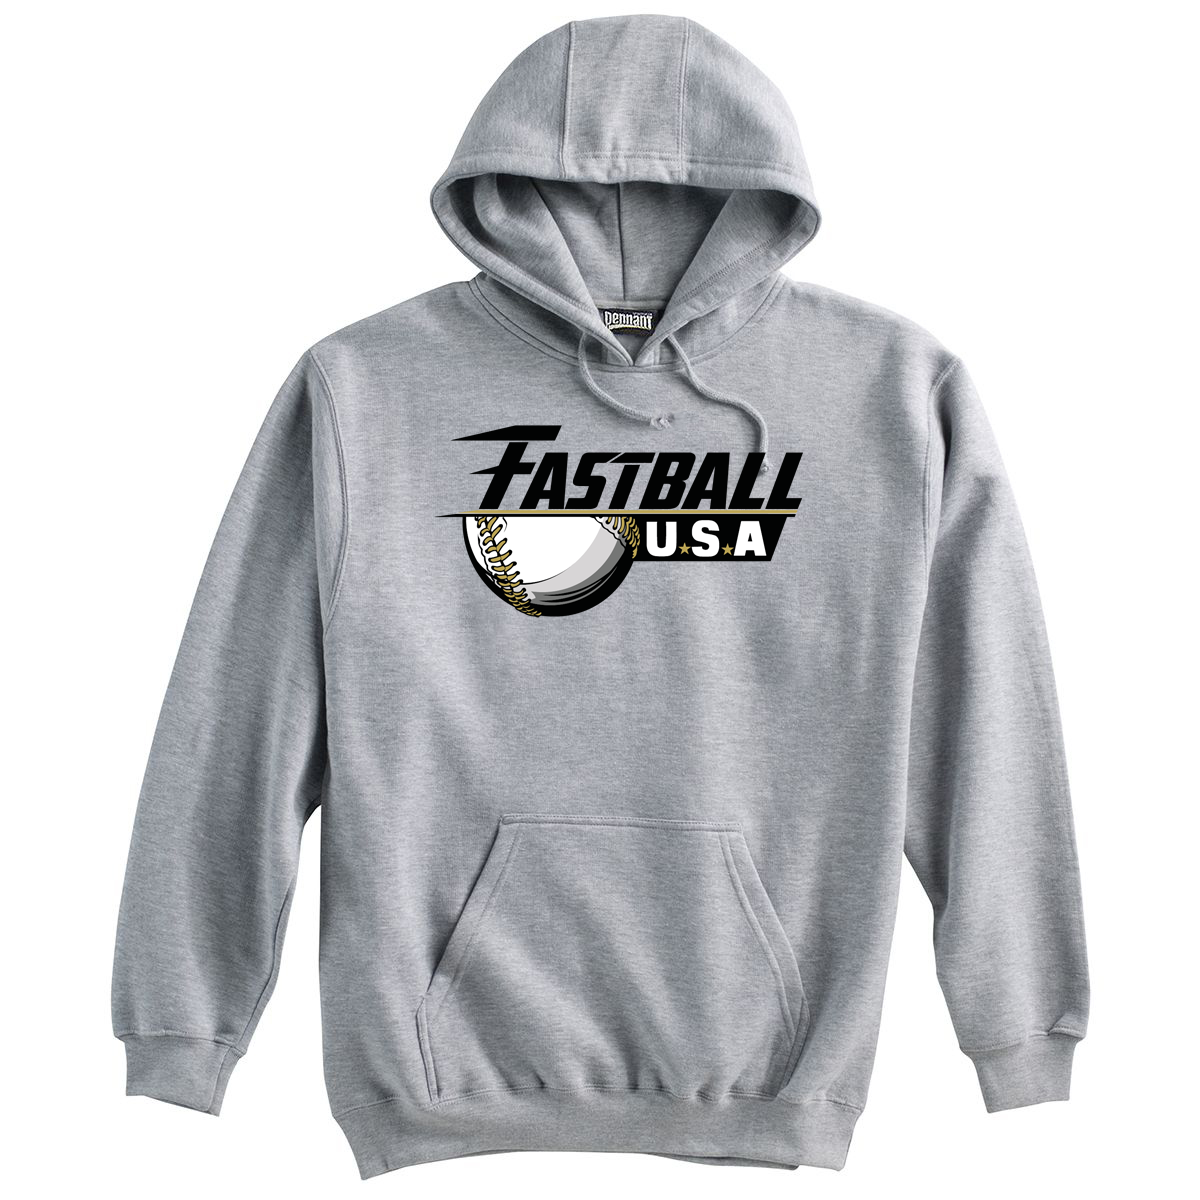 Team Fastball Baseball Sweatshirt